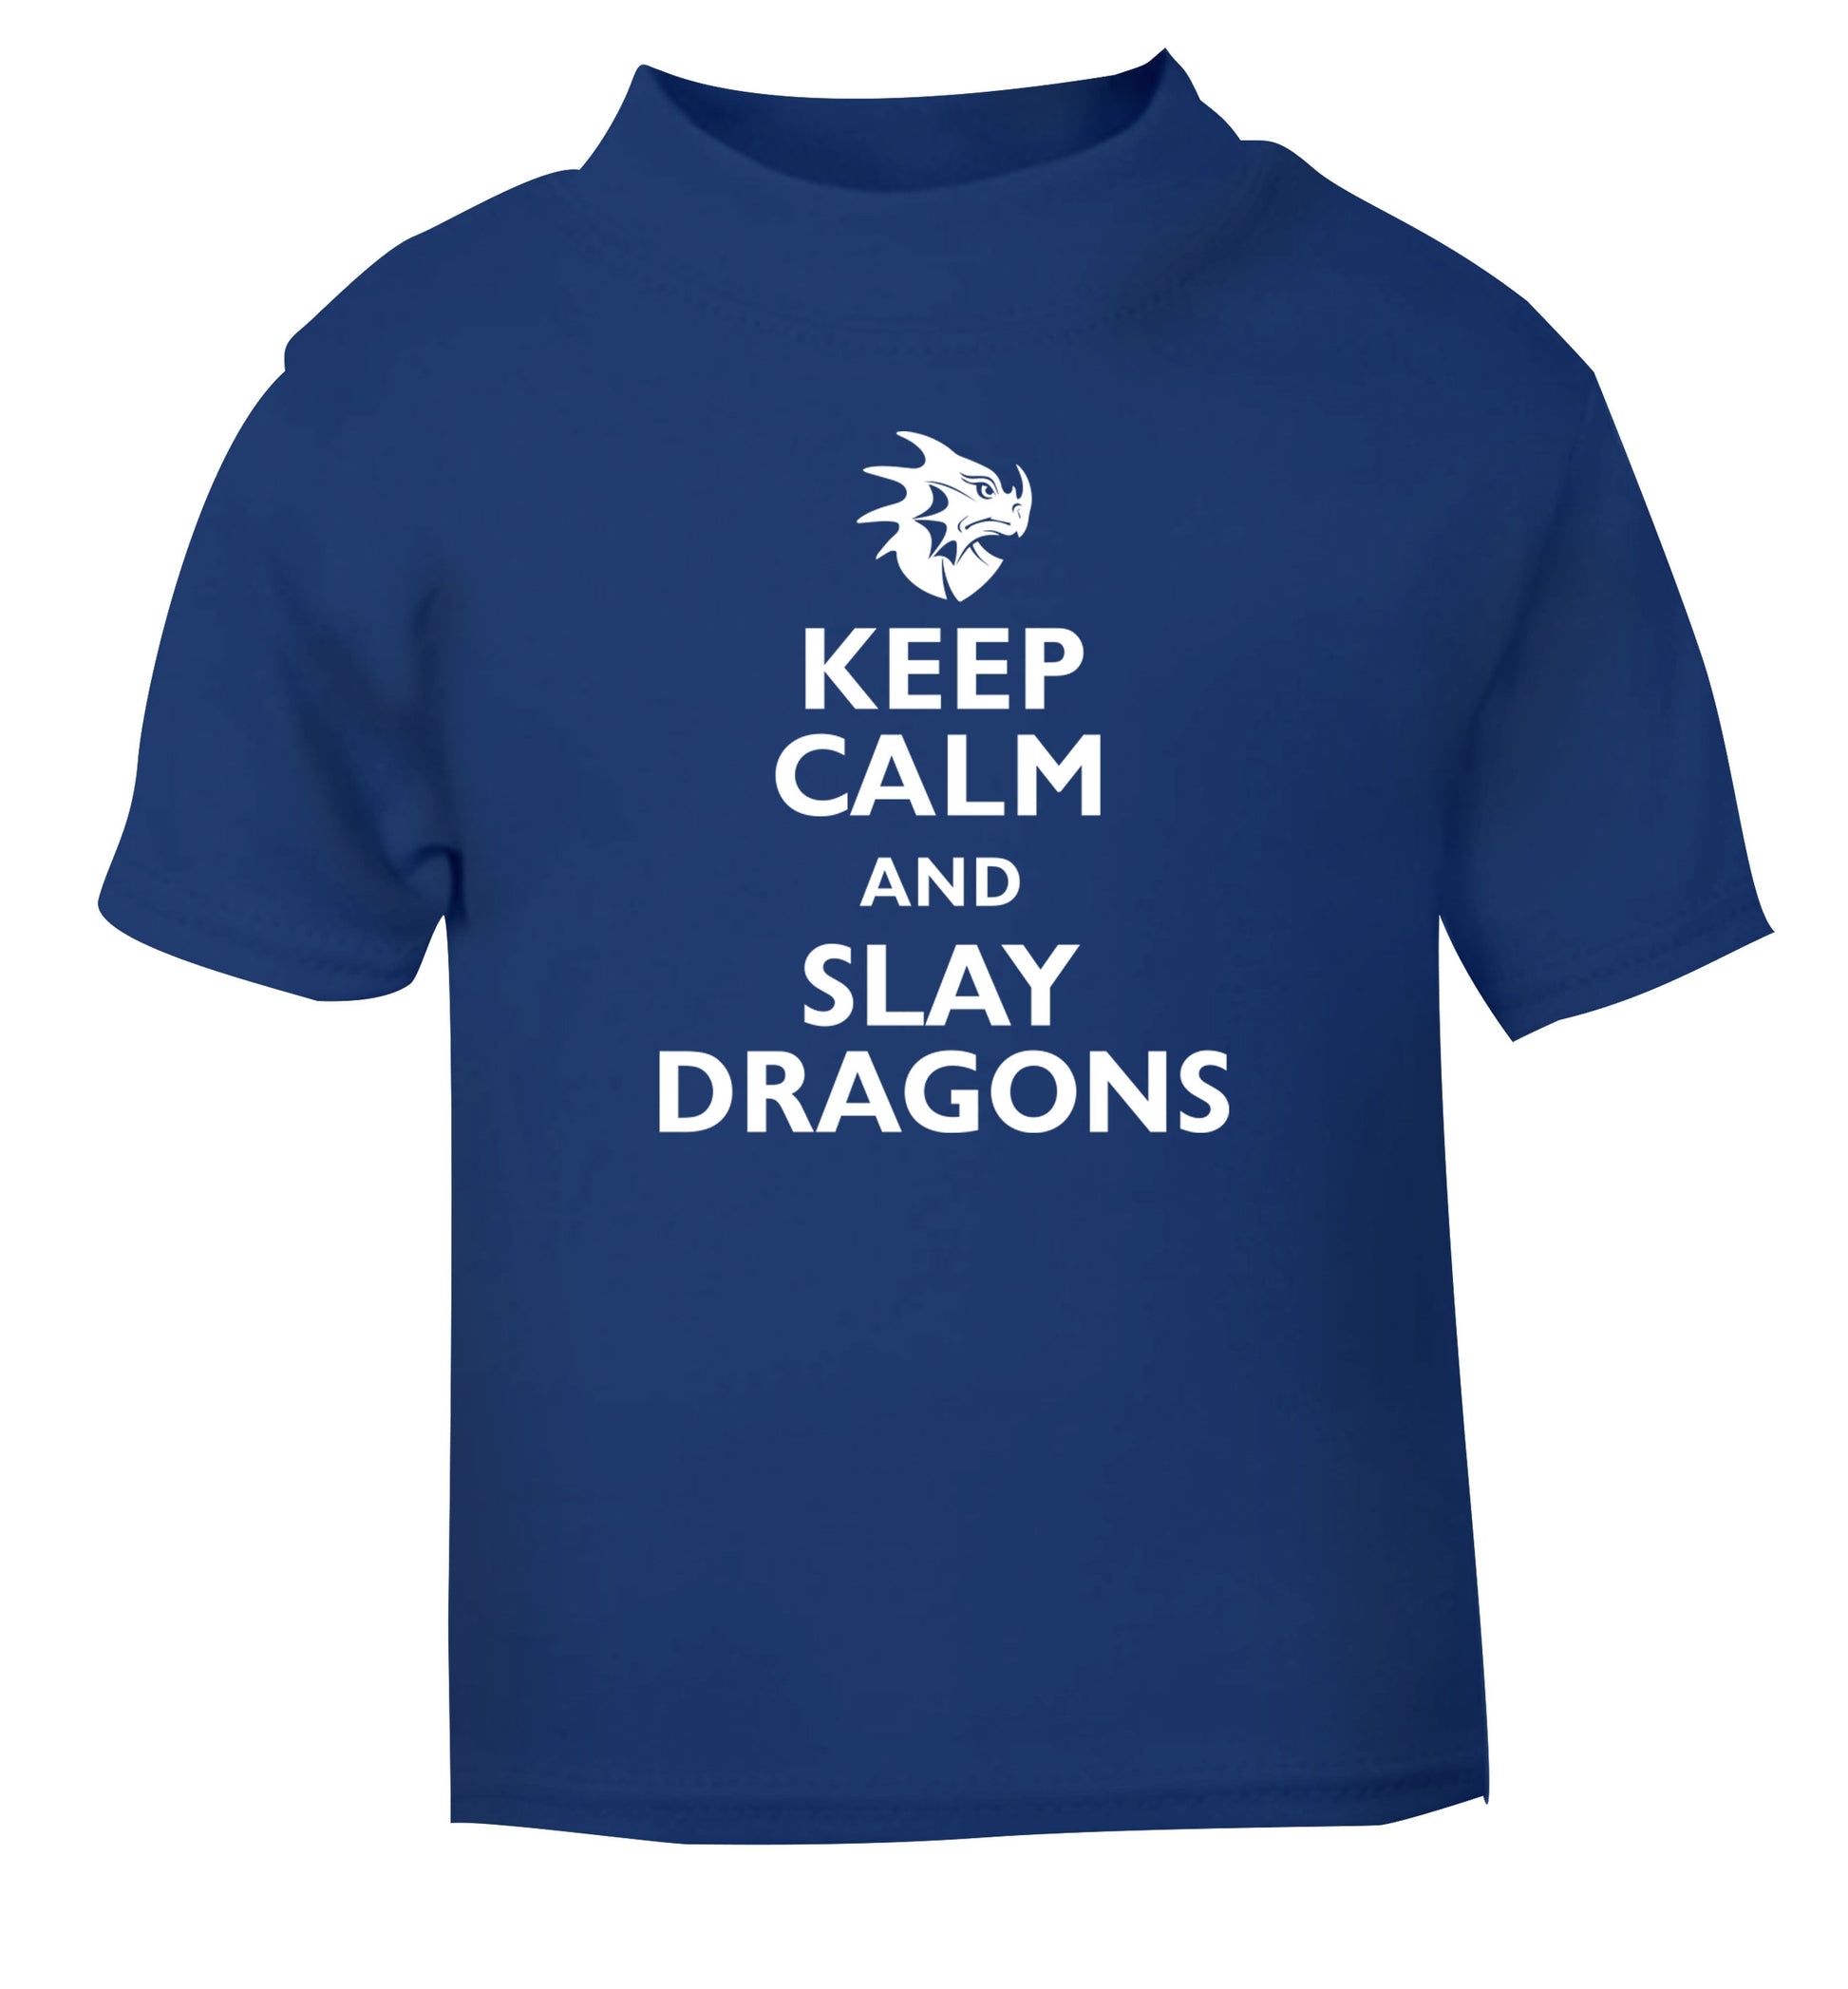 Keep calm and slay dragons blue Baby Toddler Tshirt 2 Years